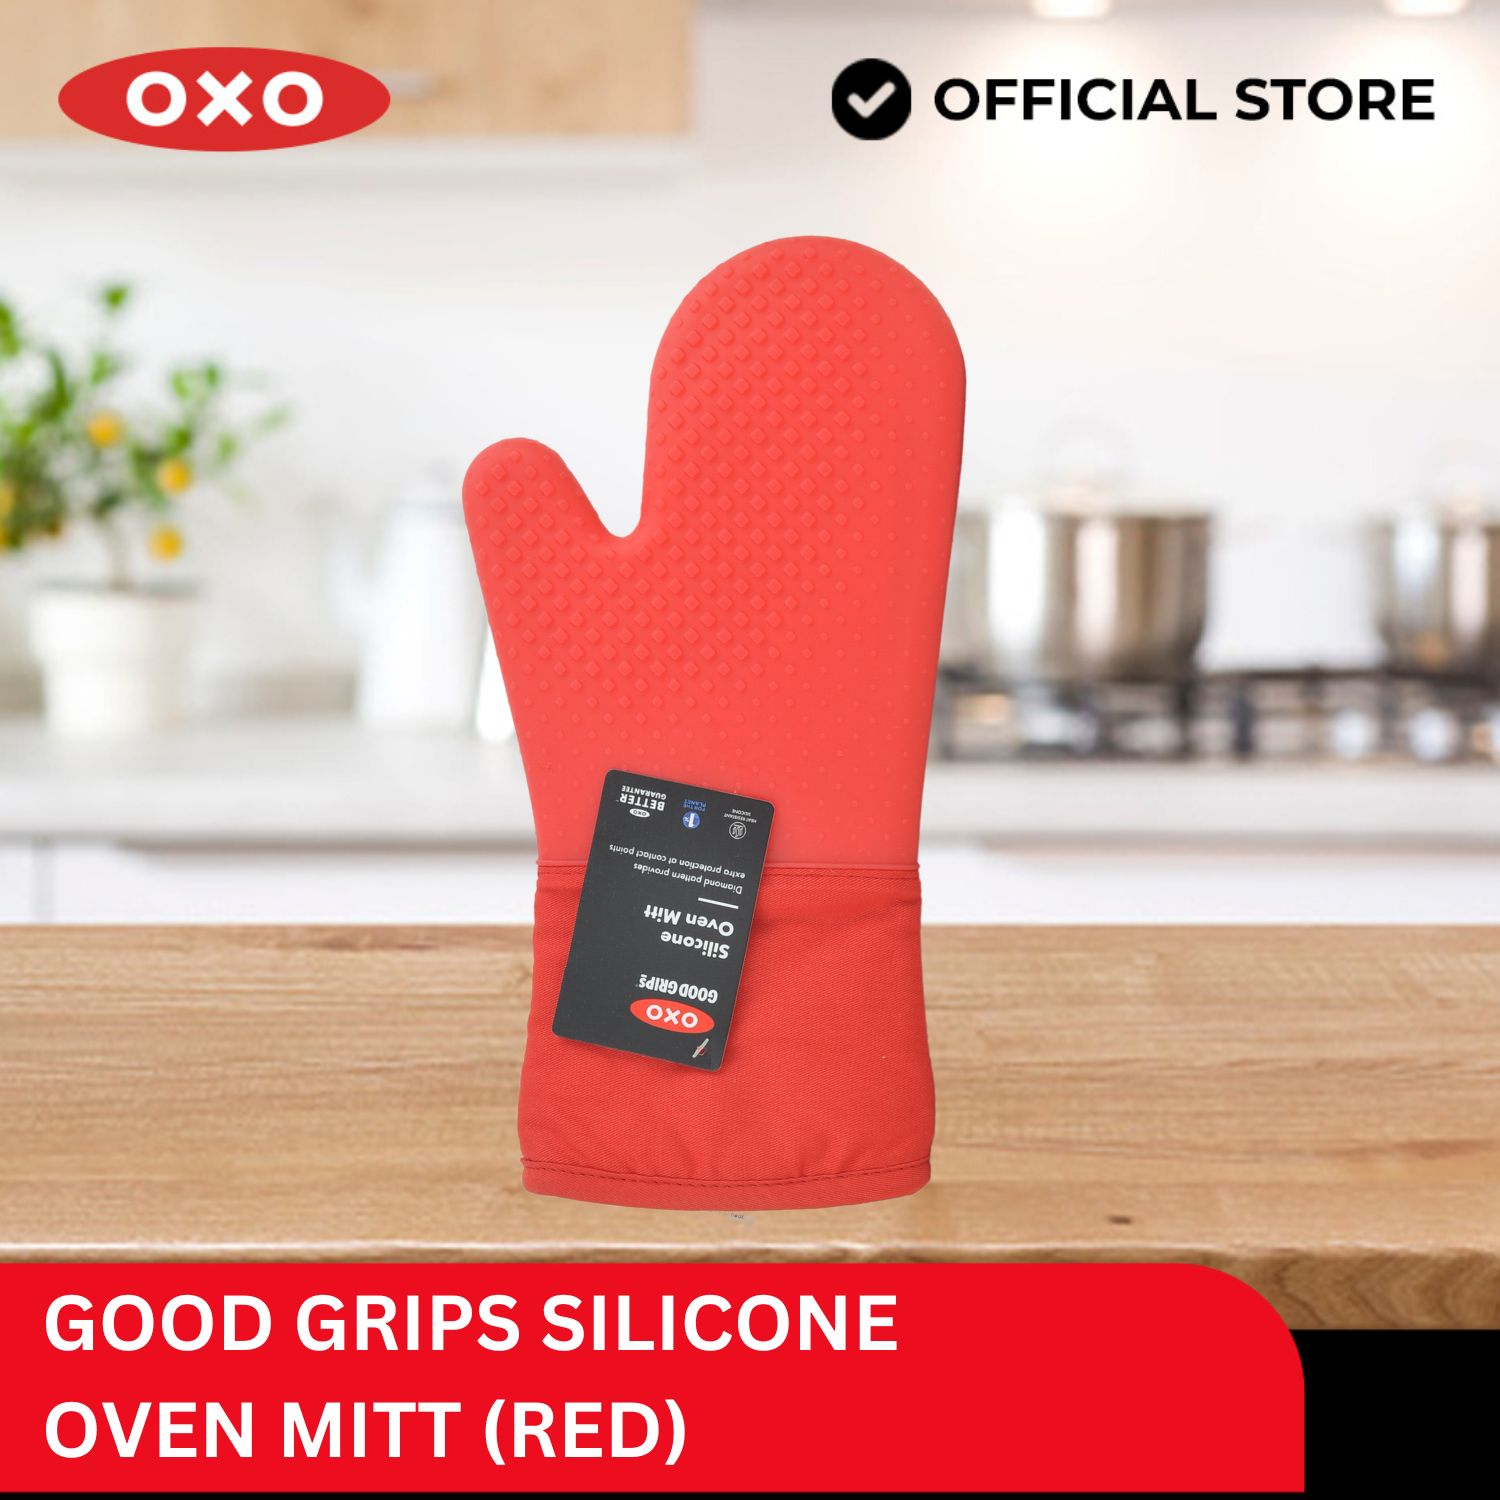 OXO Good Grips Silicone Oven Mitt, Jam